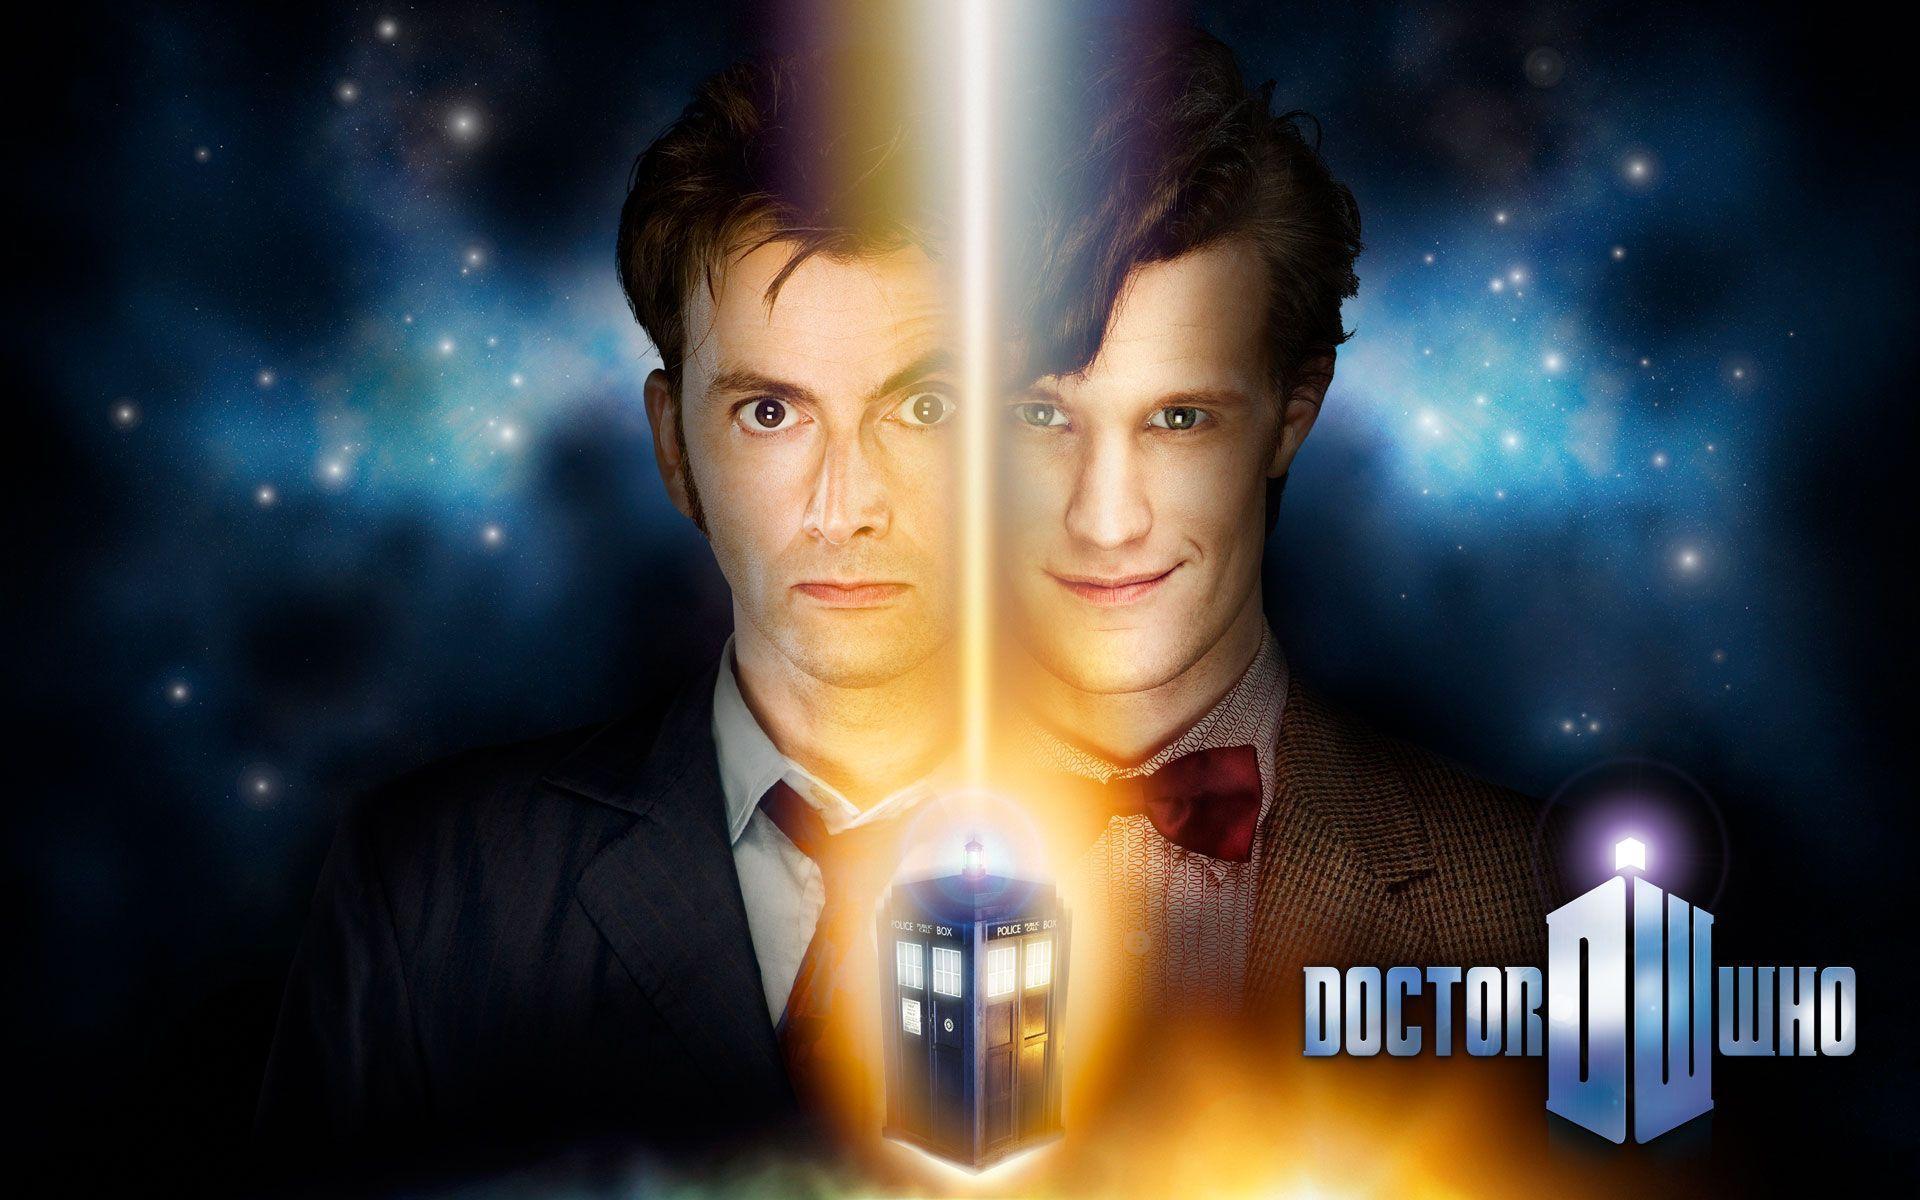 Dr Who Wallpaper For Desktop